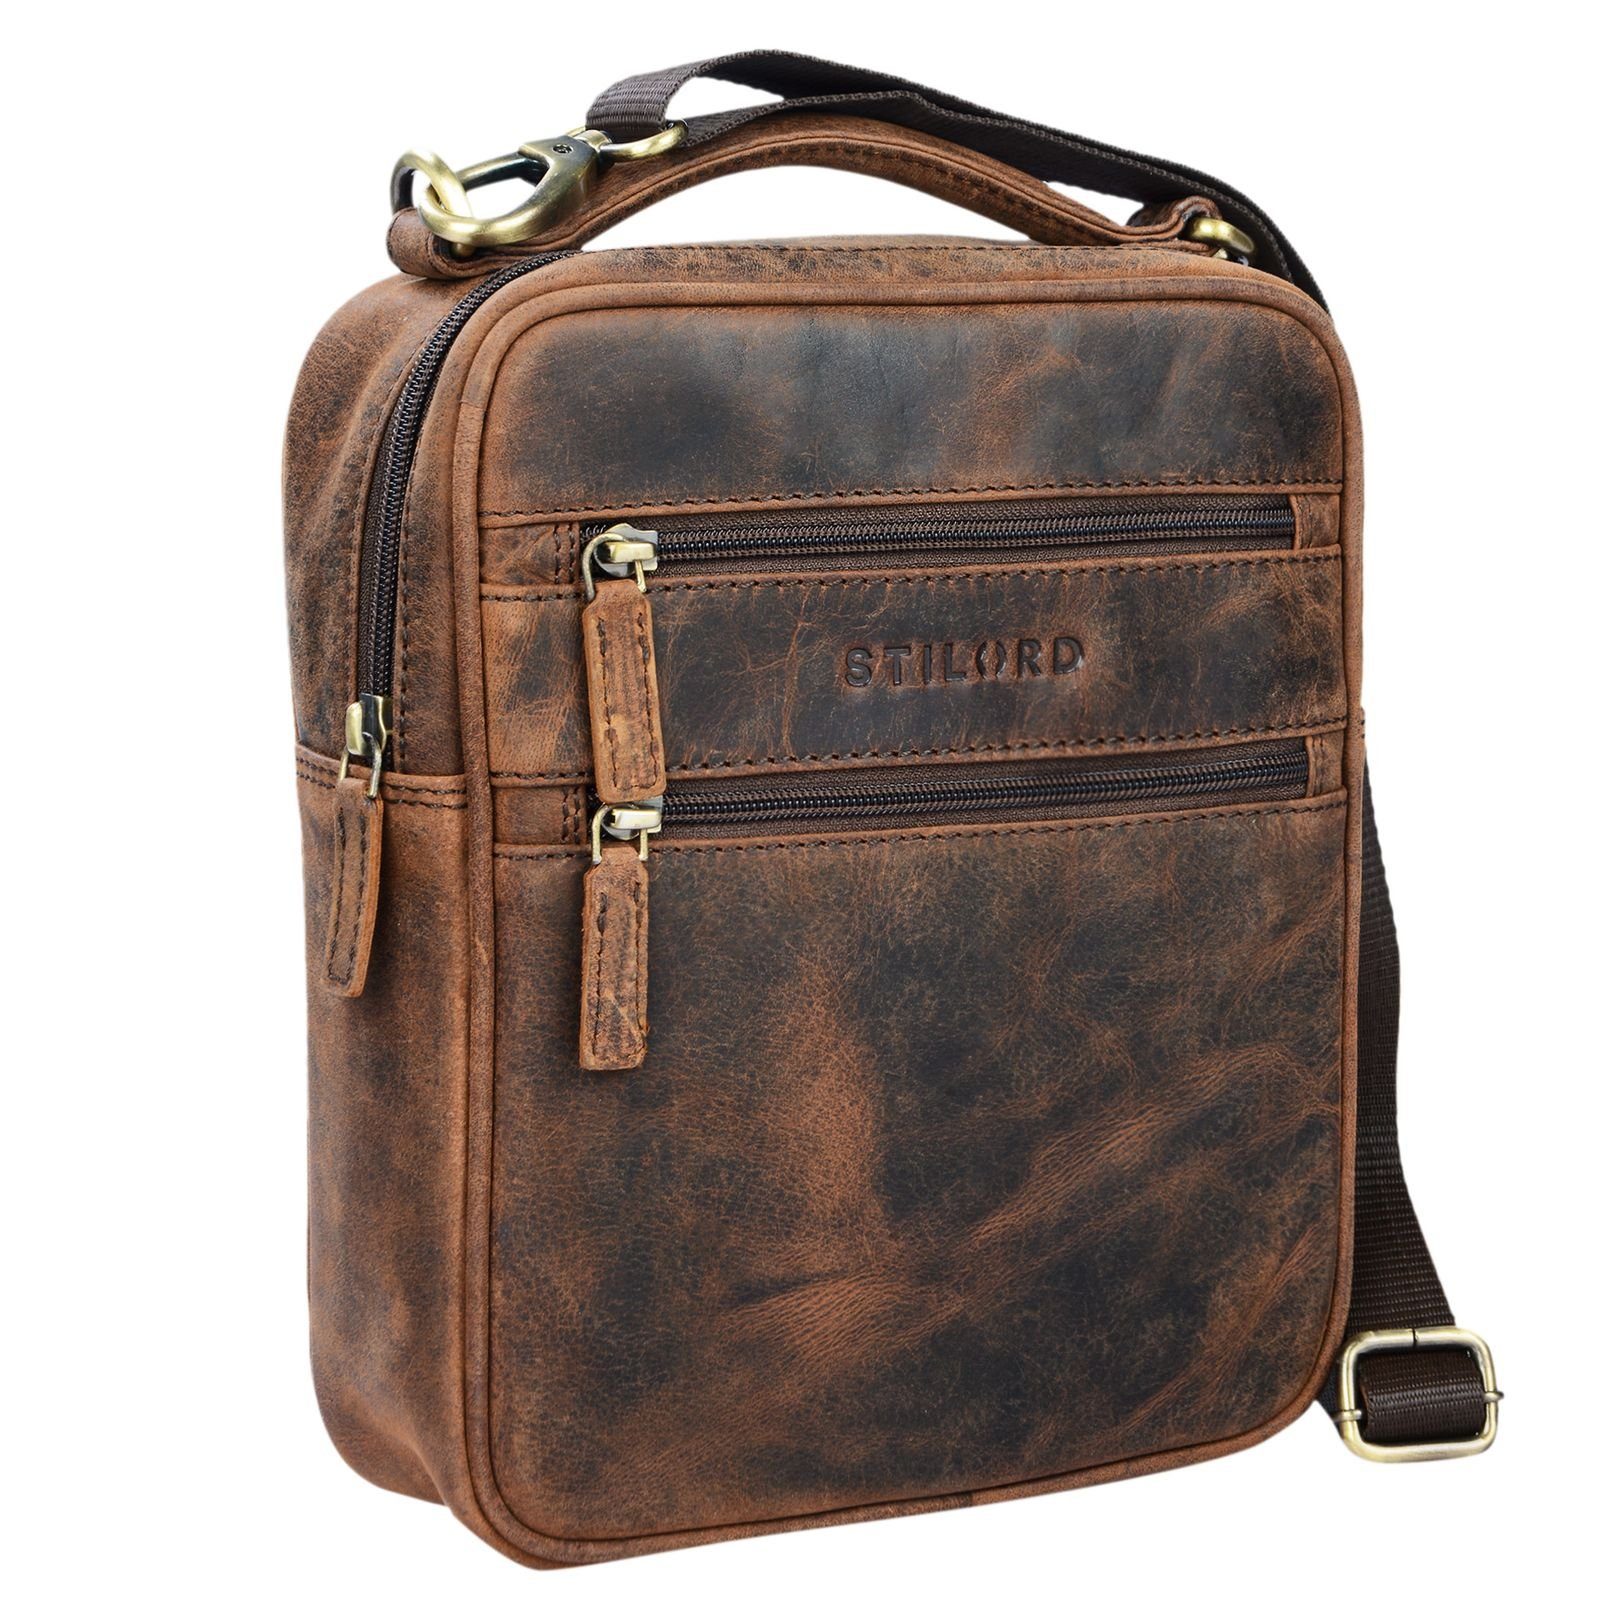 Handtasche "Mats" - Herren braun Vintage STILORD sepia Leder Messenger Bag